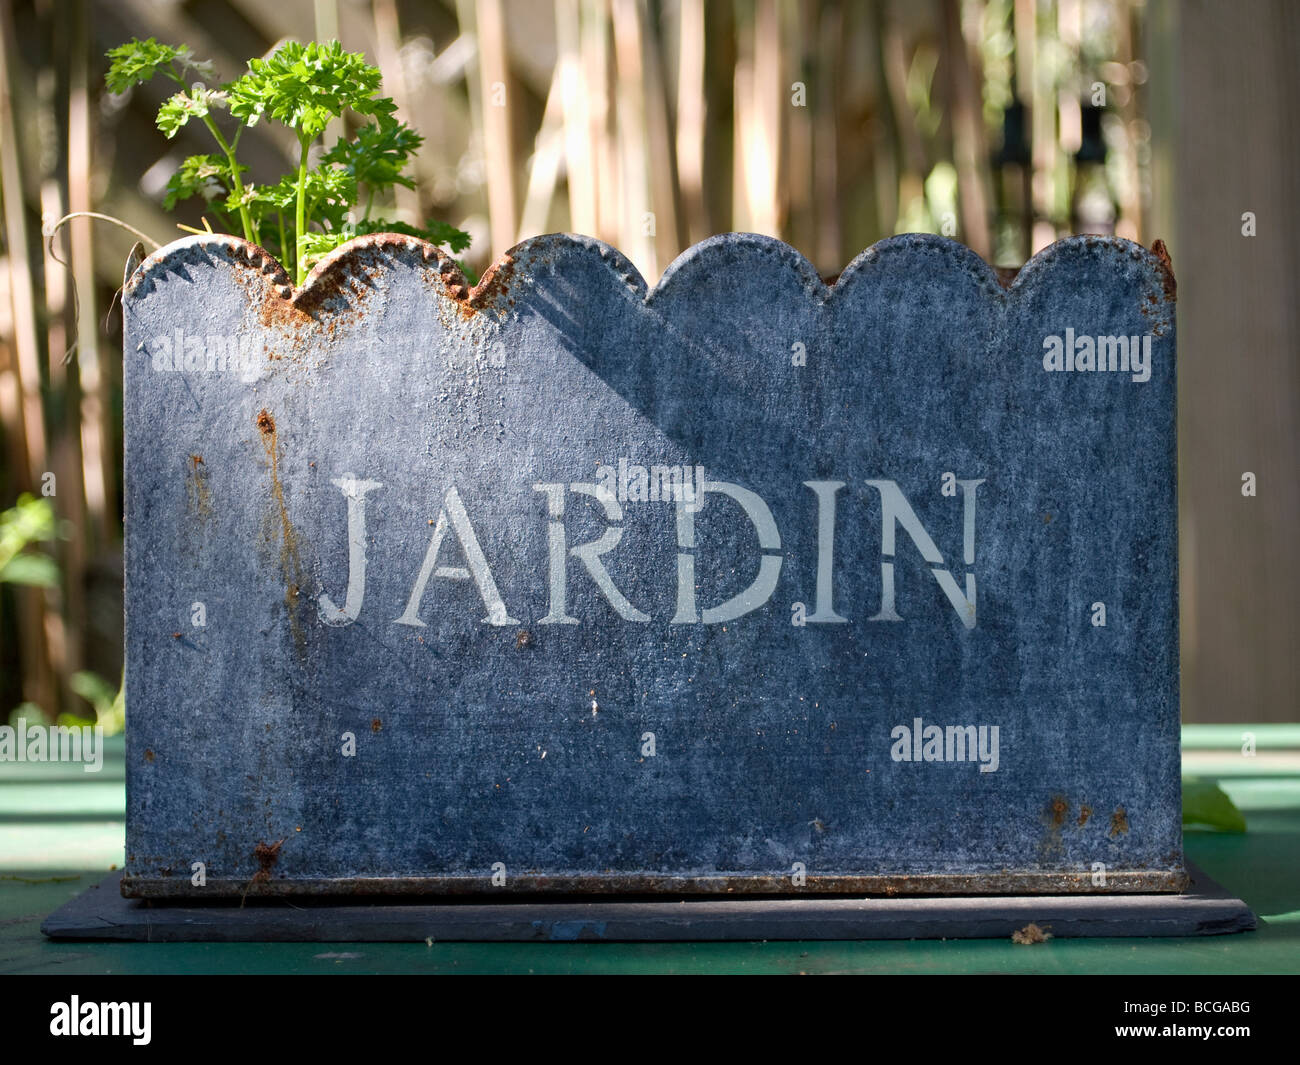 Parsley growing in 'jardin' stencilled metal planter. Stock Photo